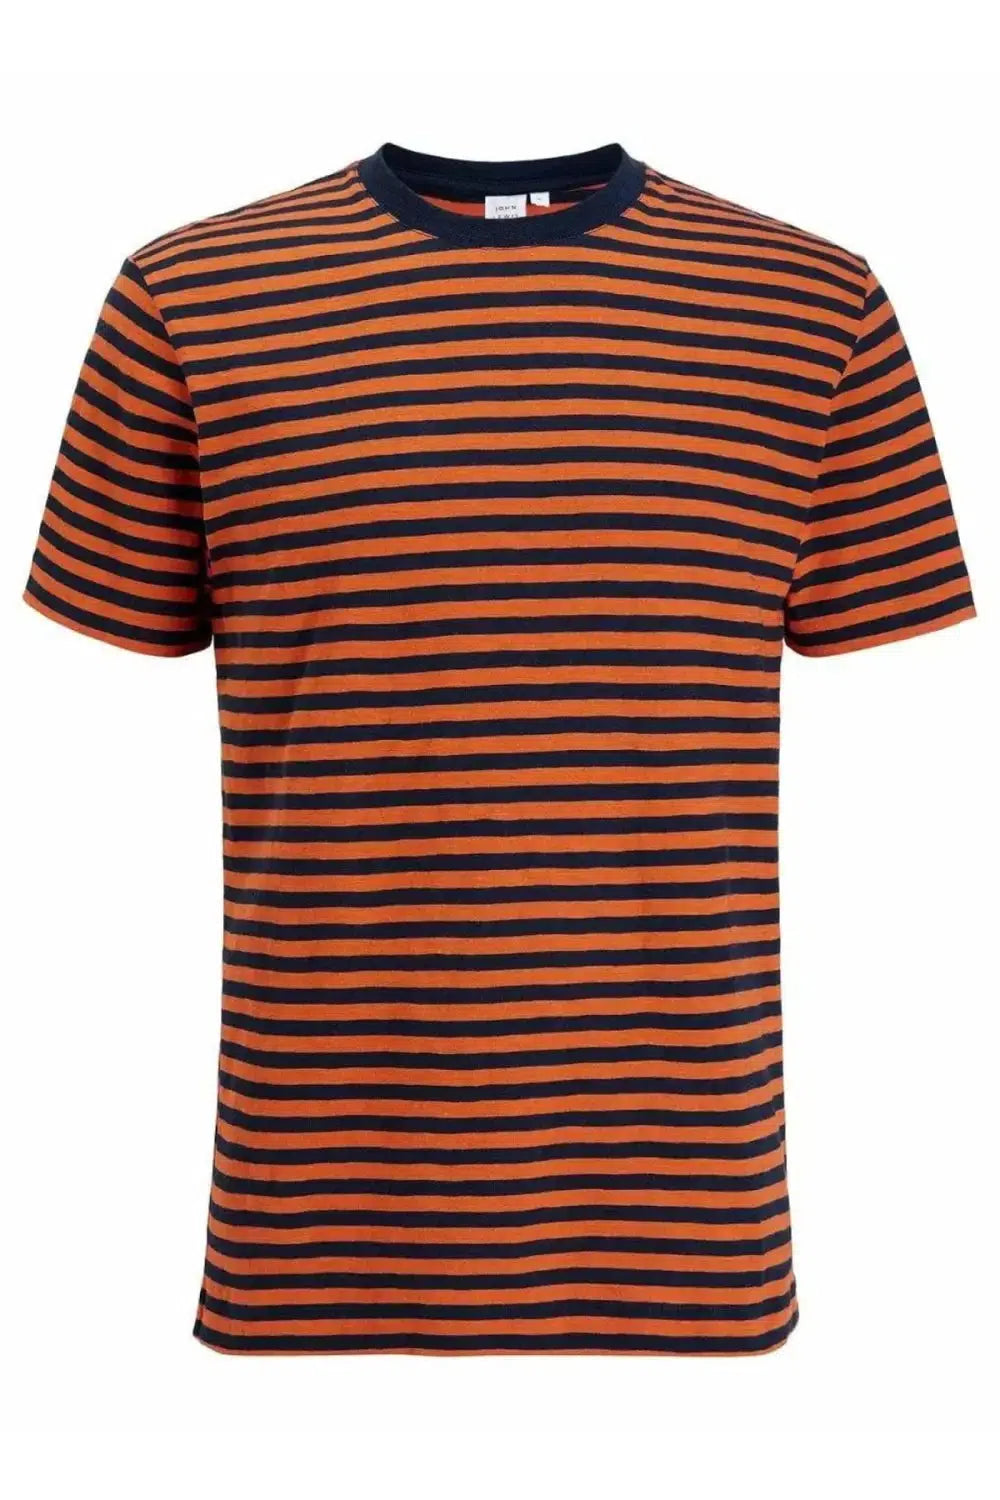 John Lewis Supima Cotton Striped T-Shirt